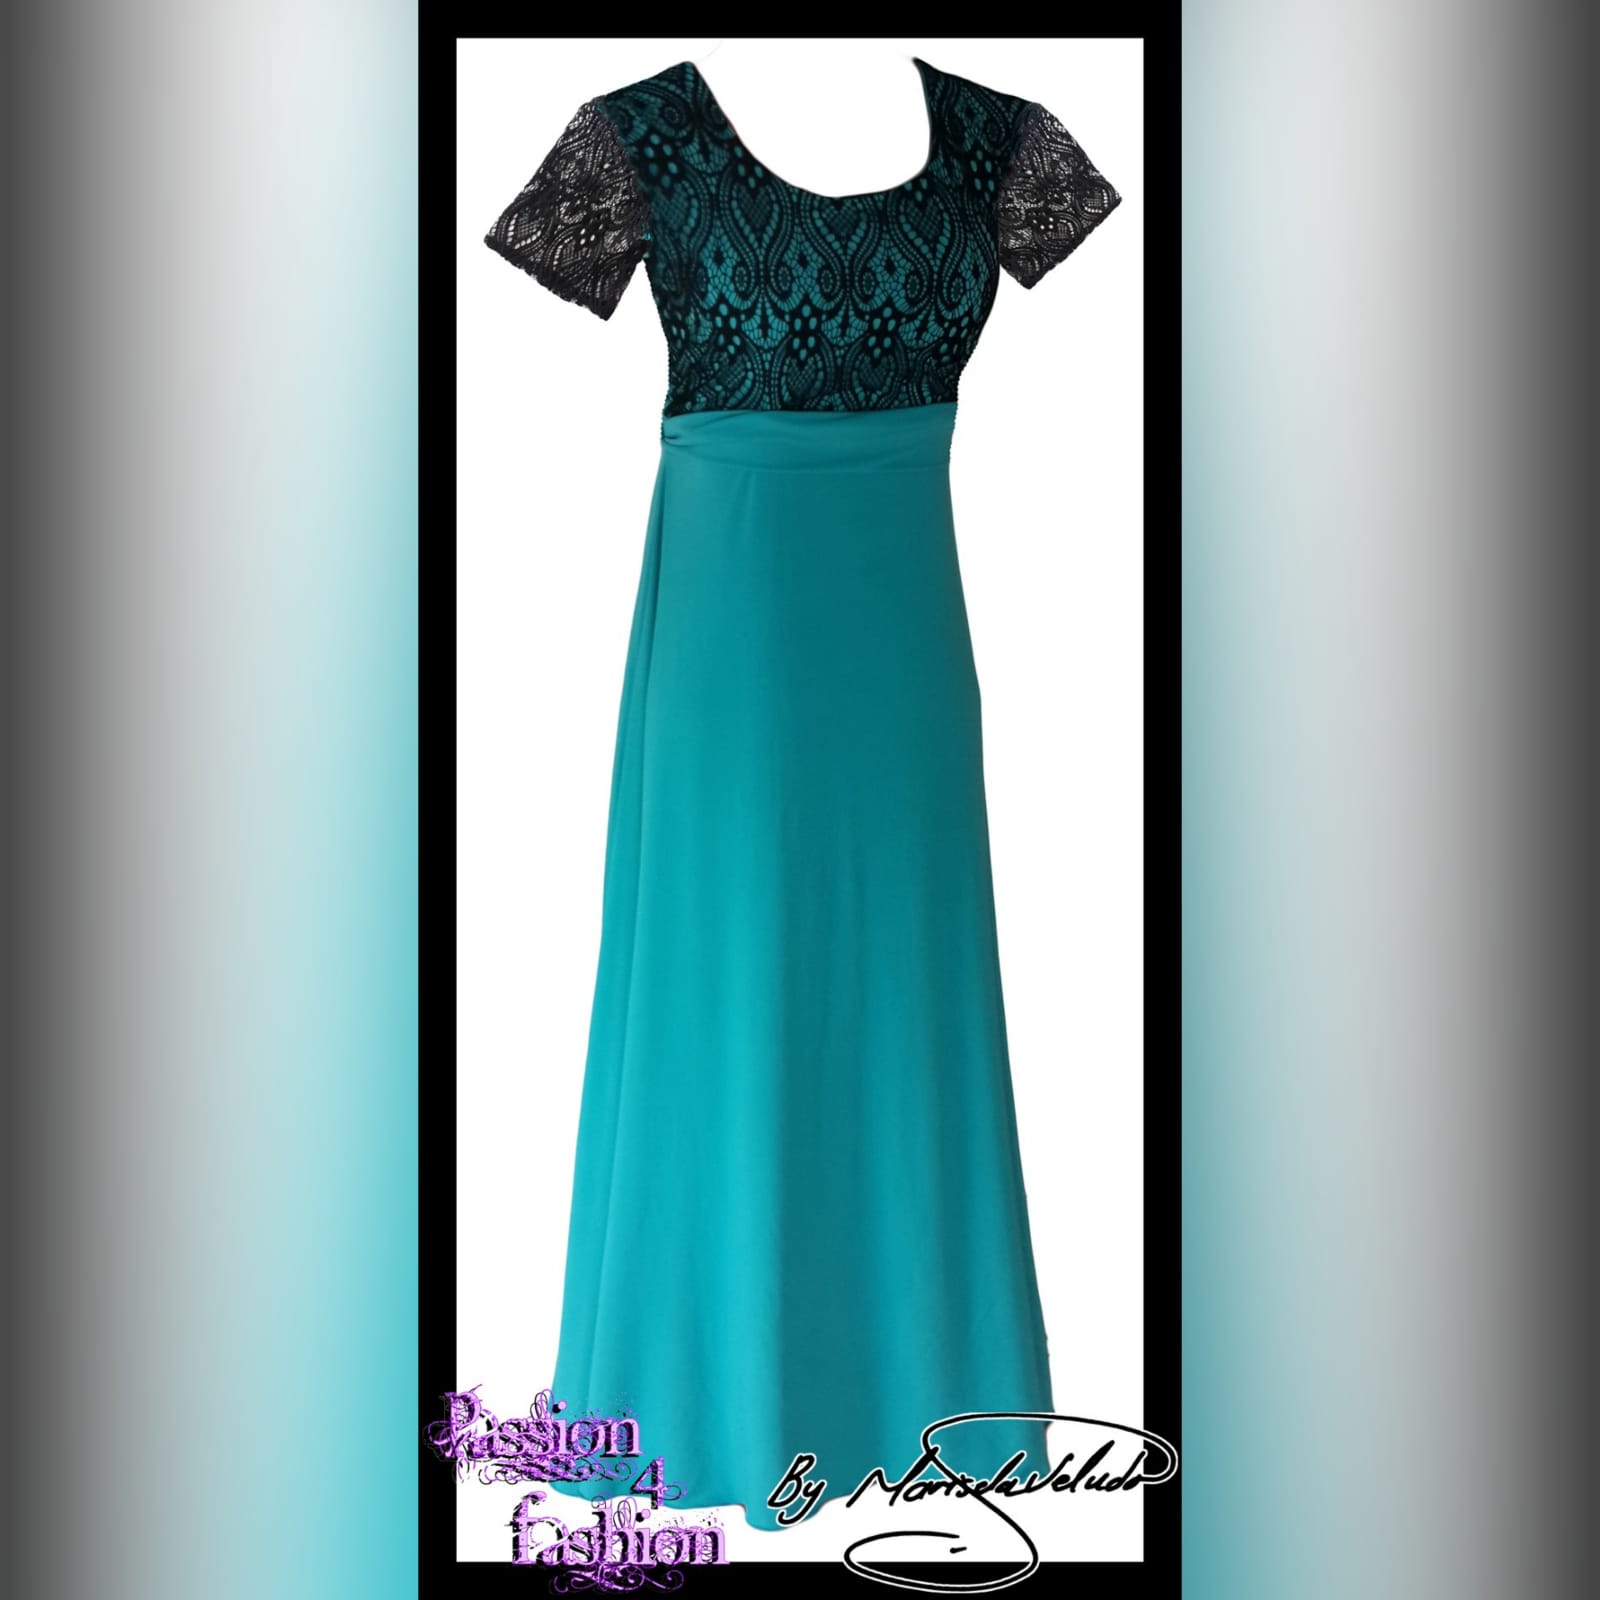 Turquoise & black lace evening dress 2 turquoise & black lace evening dress with short sheer lace sleeves